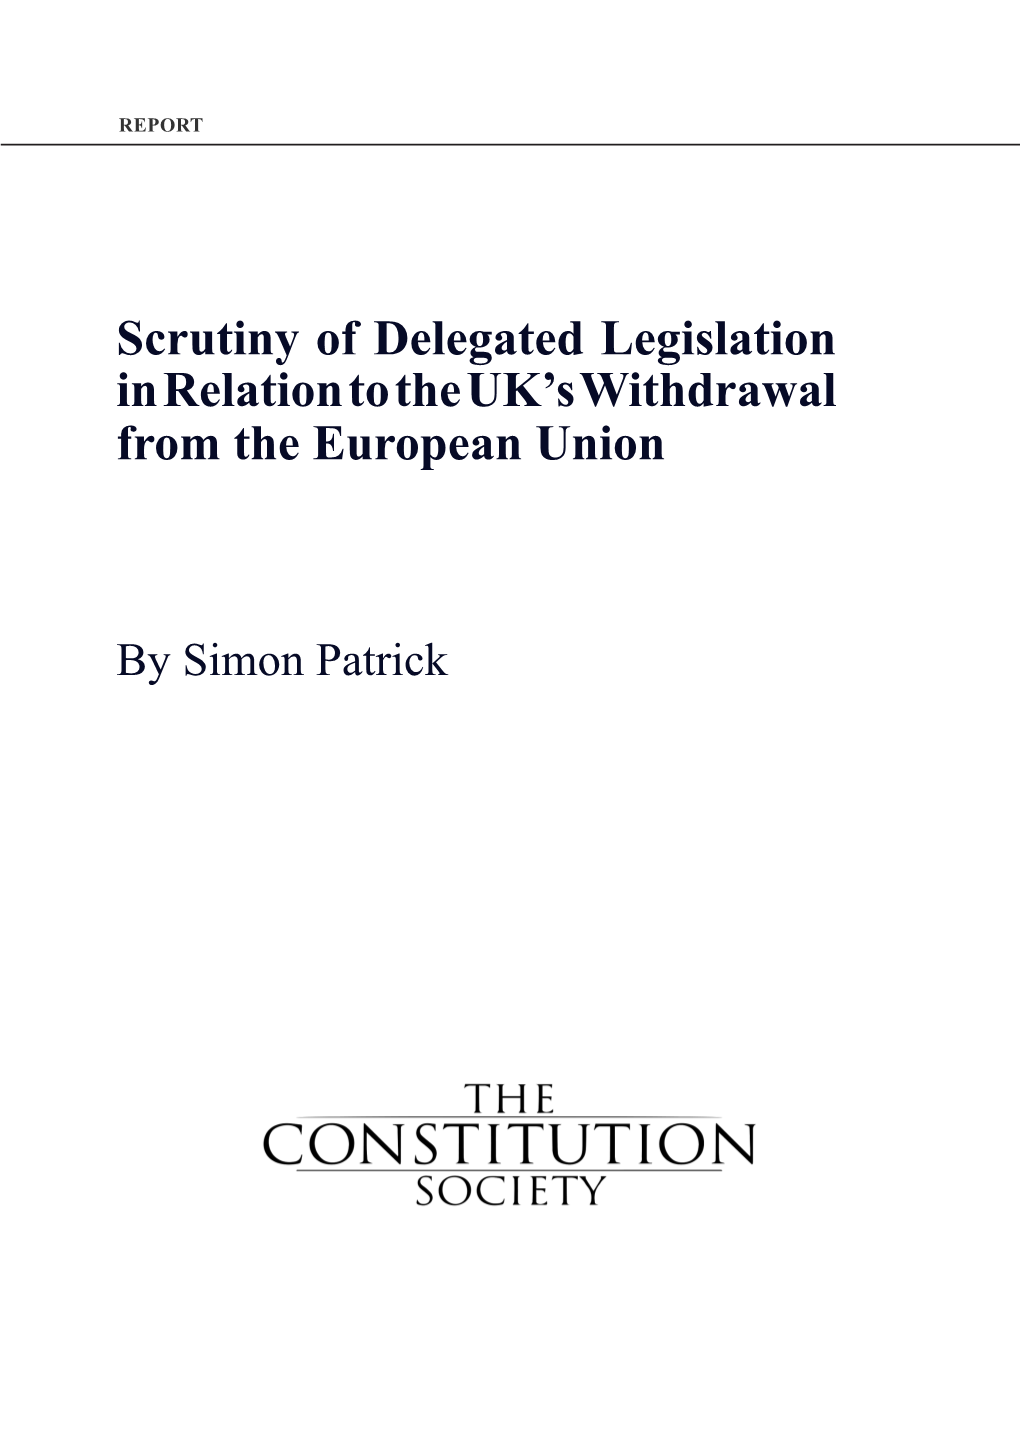 Download PDF on Scrutiny of Delegated Legislation in Relation To